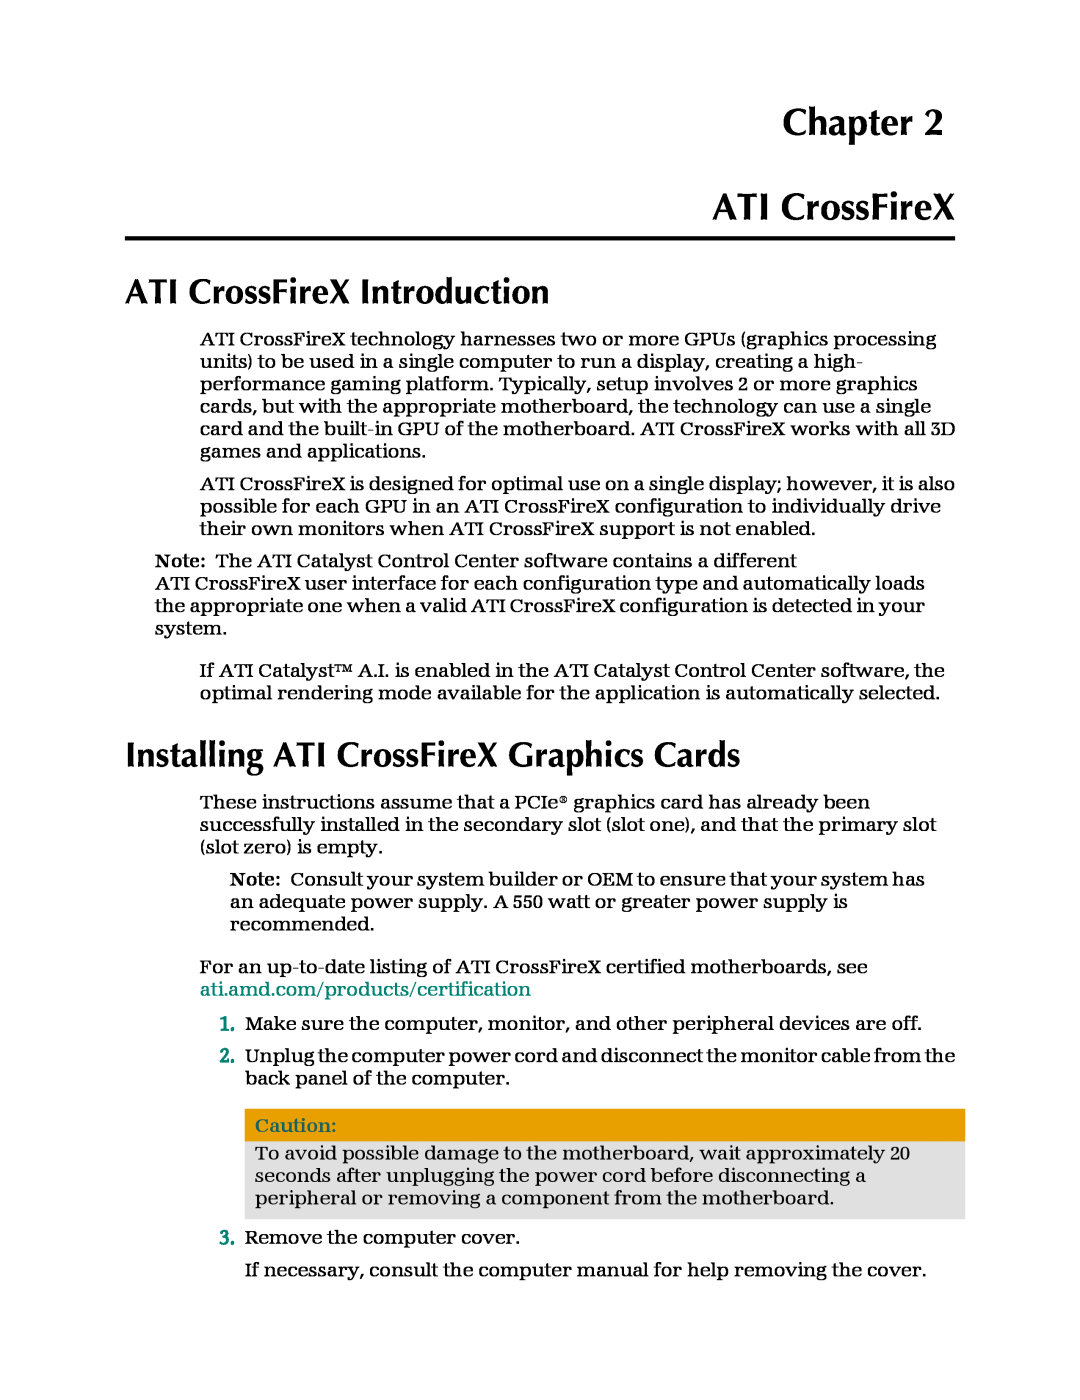 AMD 3600 manual Chapter ATI CrossFireX, ATI CrossFireX Introduction, Installing ATI CrossFireX Graphics Cards 